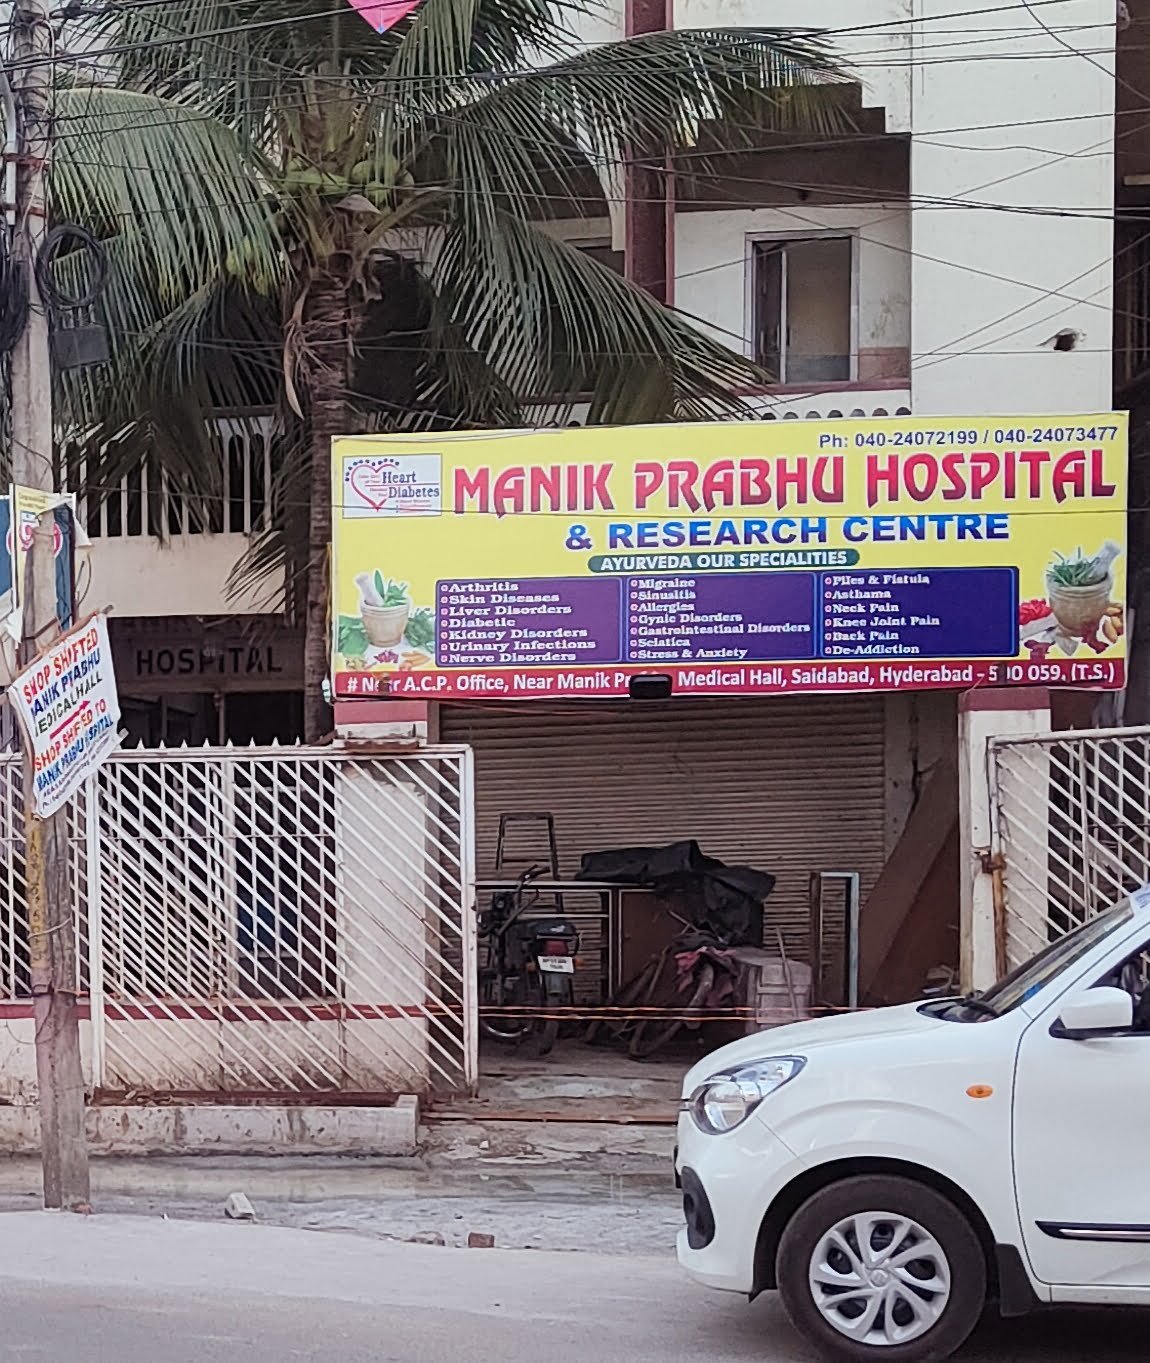 Manik Prabhu Hospital & Research Centre in Saidabad